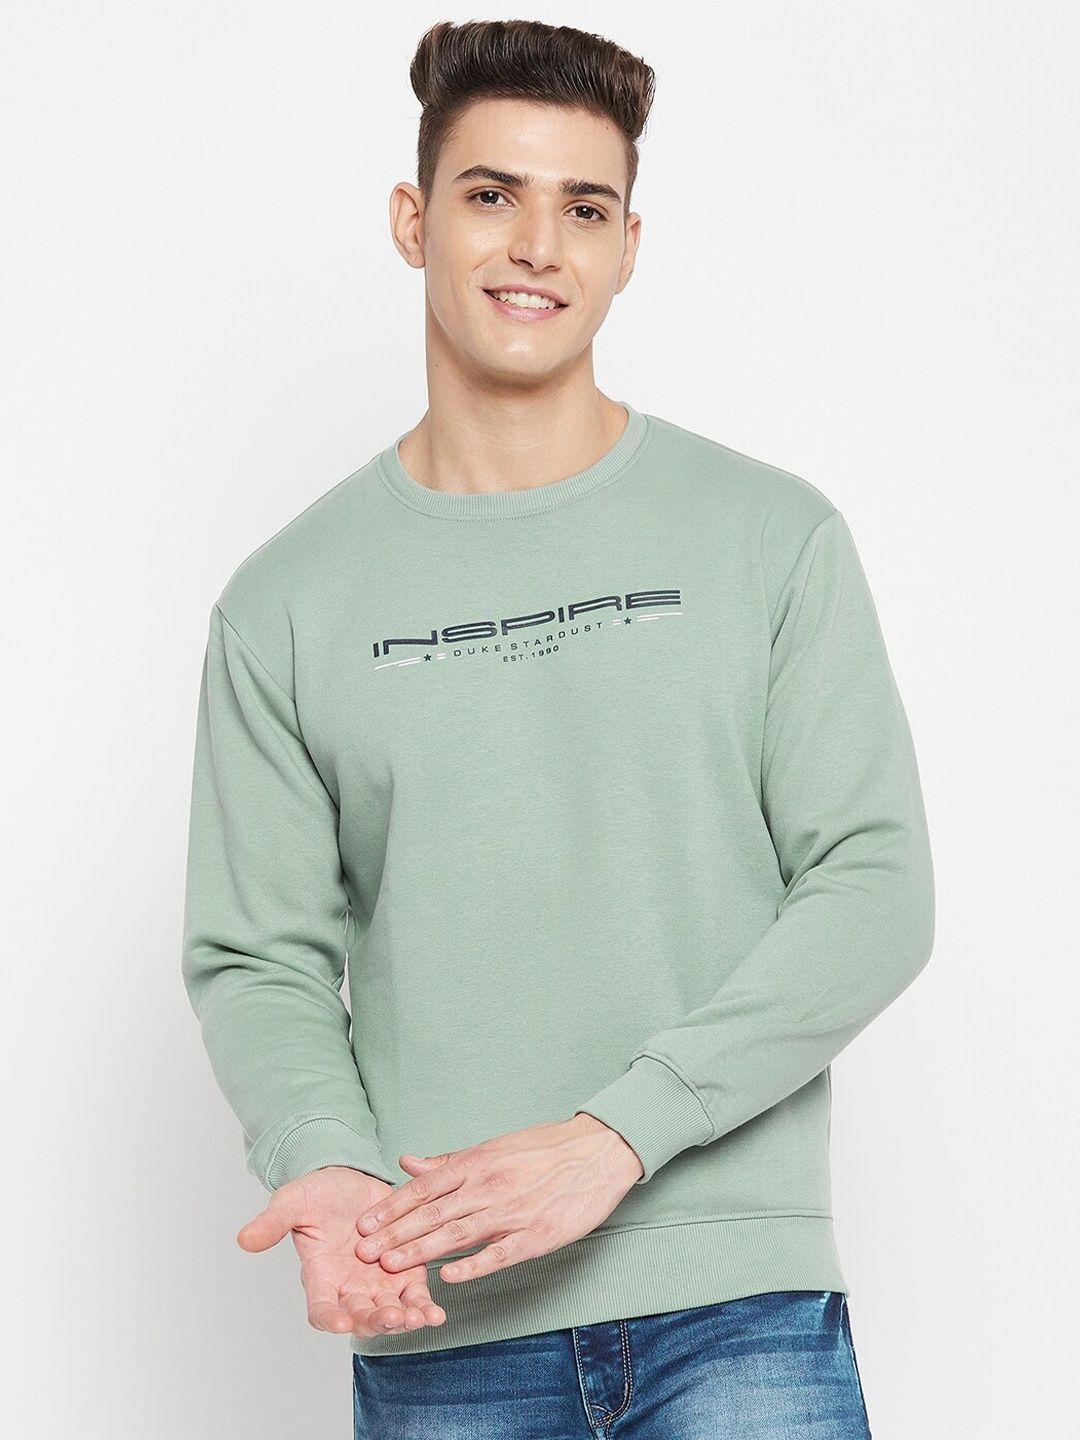 duke-men-green-printed-sweatshirt